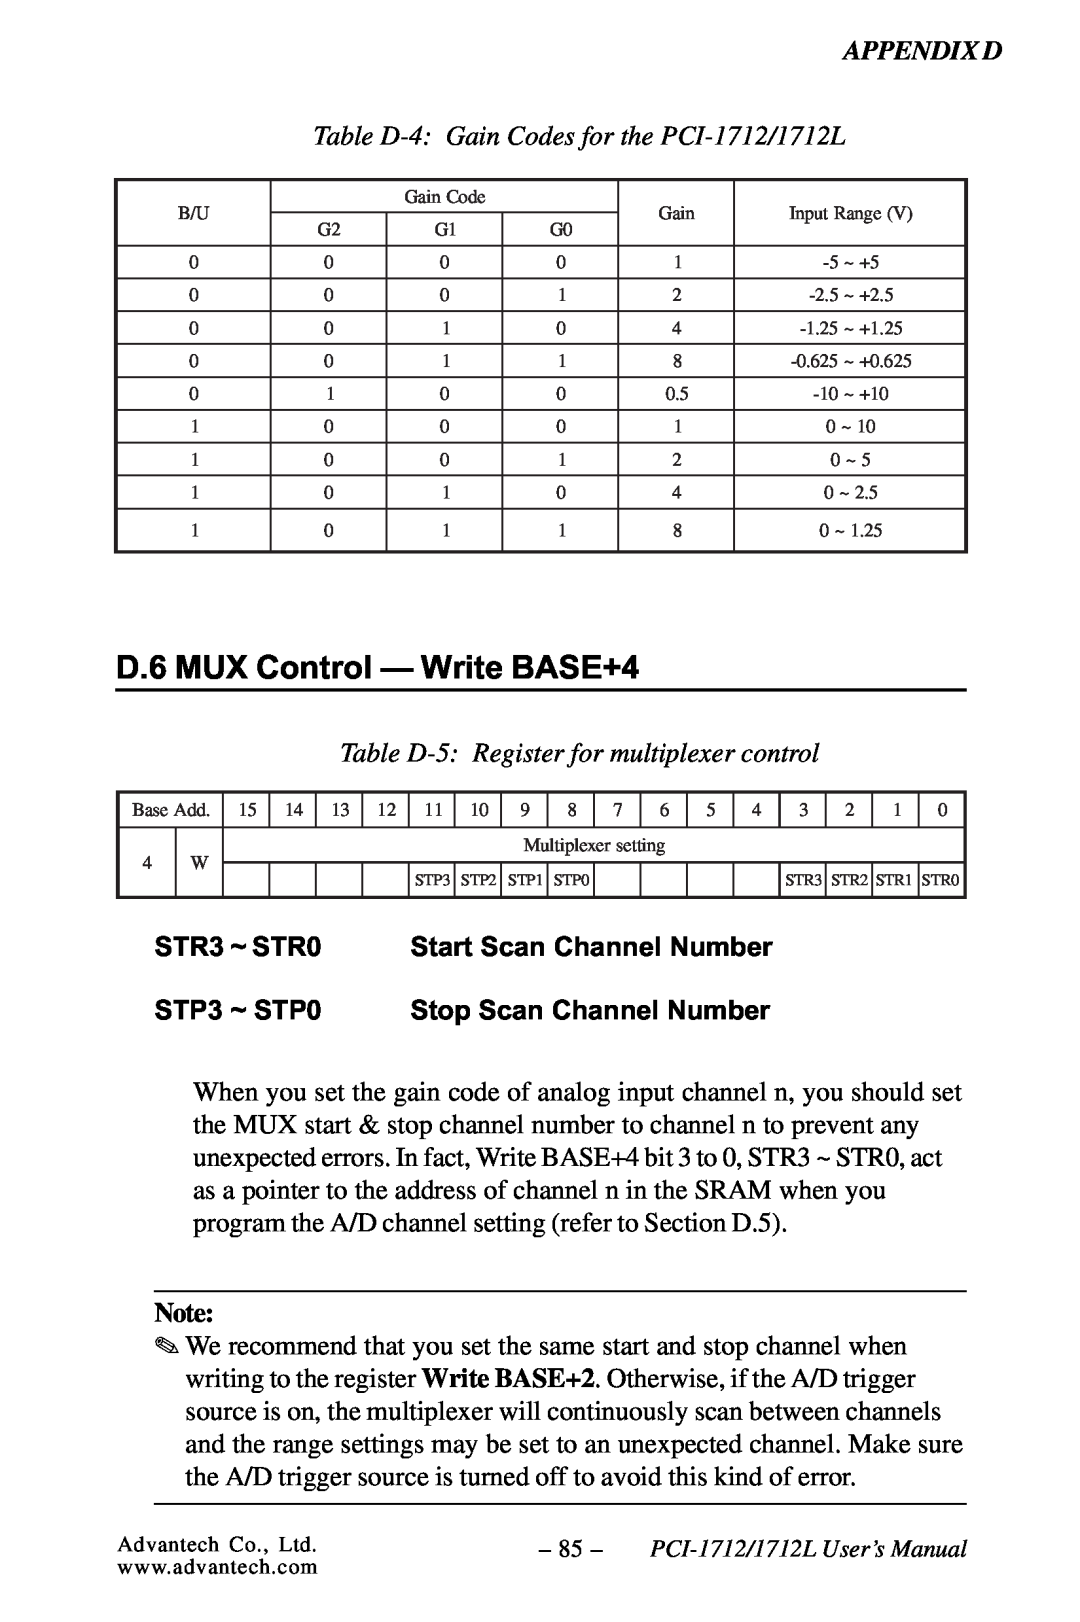 Konica Minolta PCI-1712L D.6 MUX Control - Write BASE+4, Table D-4 Gain Codes for the PCI-1712/1712L, STR3 ~ STR0 